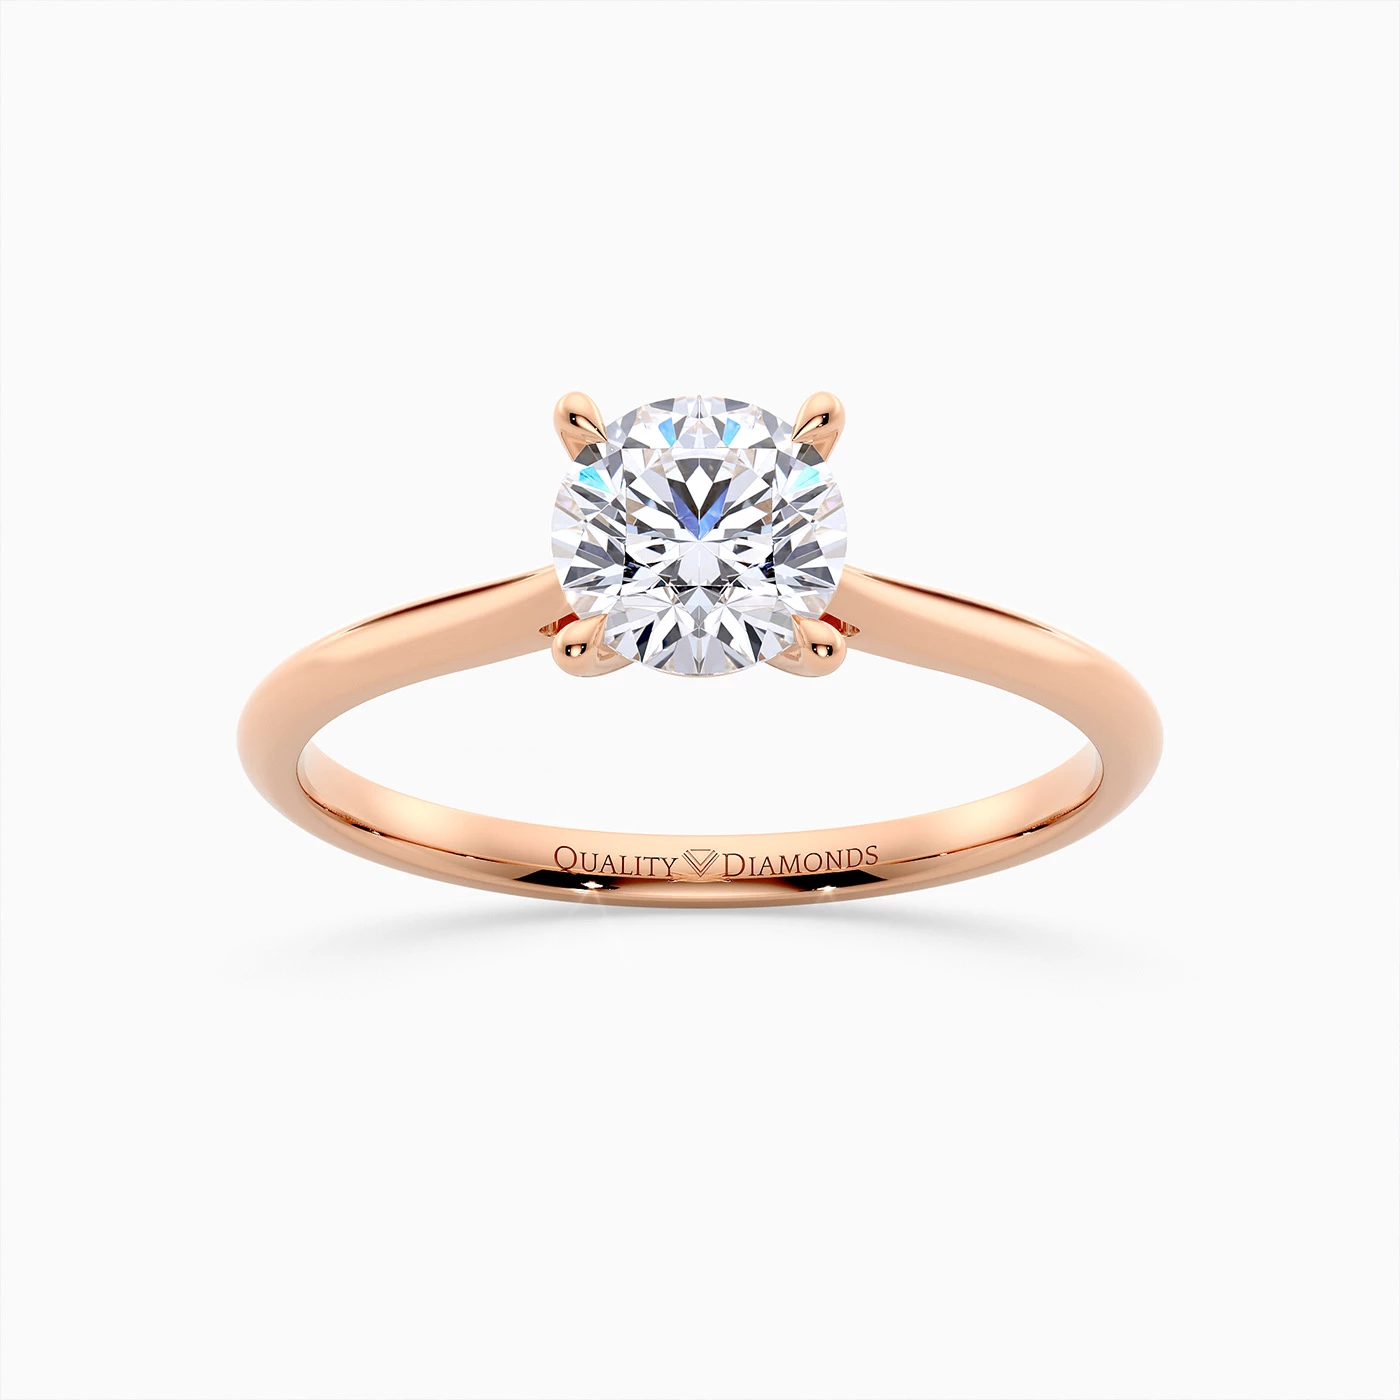 Round Brilliant Carys Diamond Ring in 9K Rose Gold